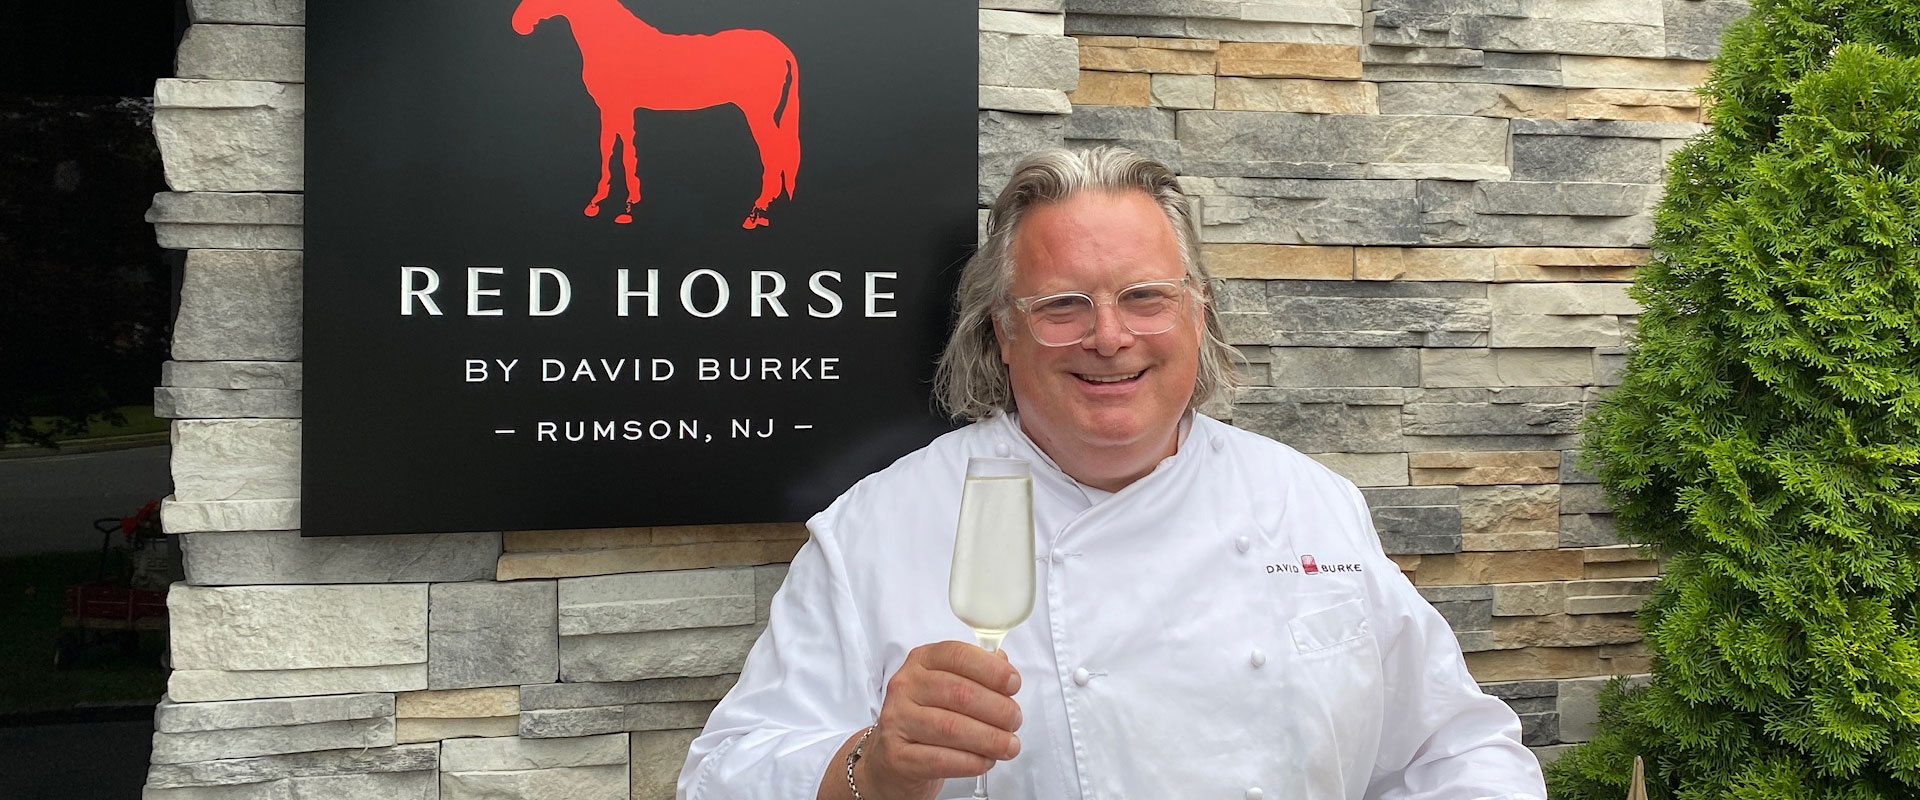 Chef David Burke at Red Horse by David Burke